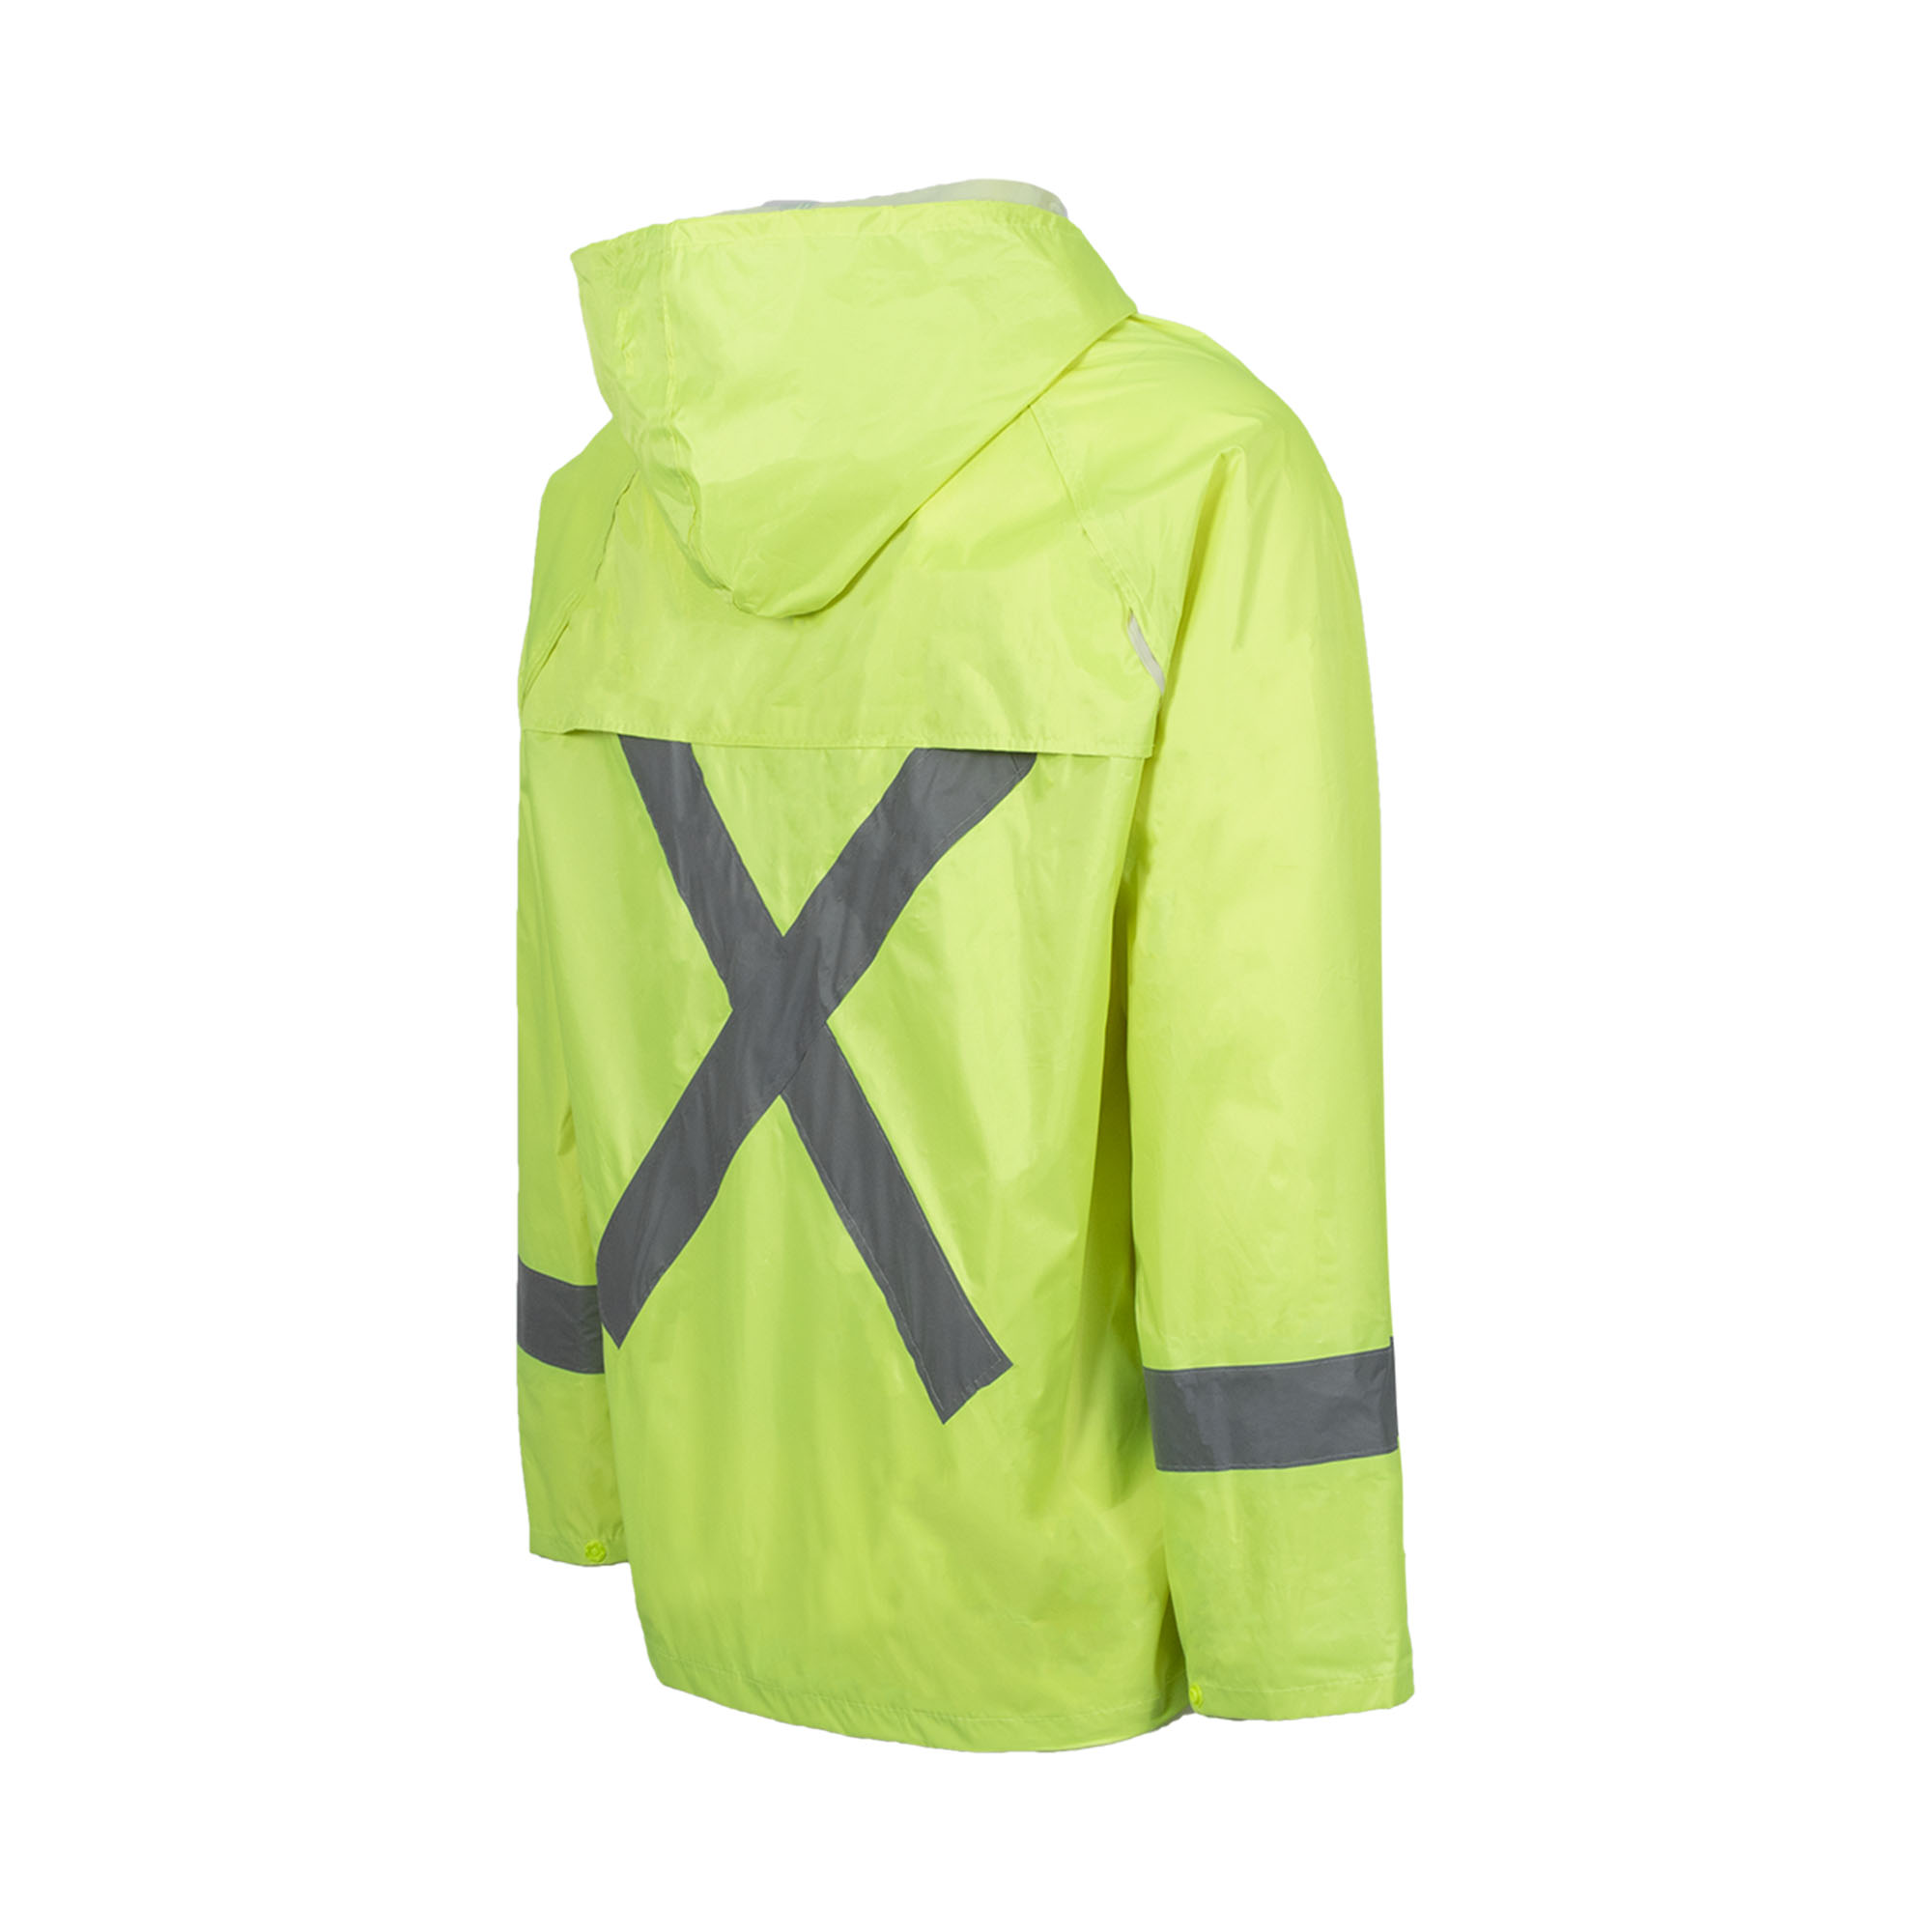 High Visibility Lime Rain Jacket & Pant for Men Safety Reflective Rain Suit M, Lime 02